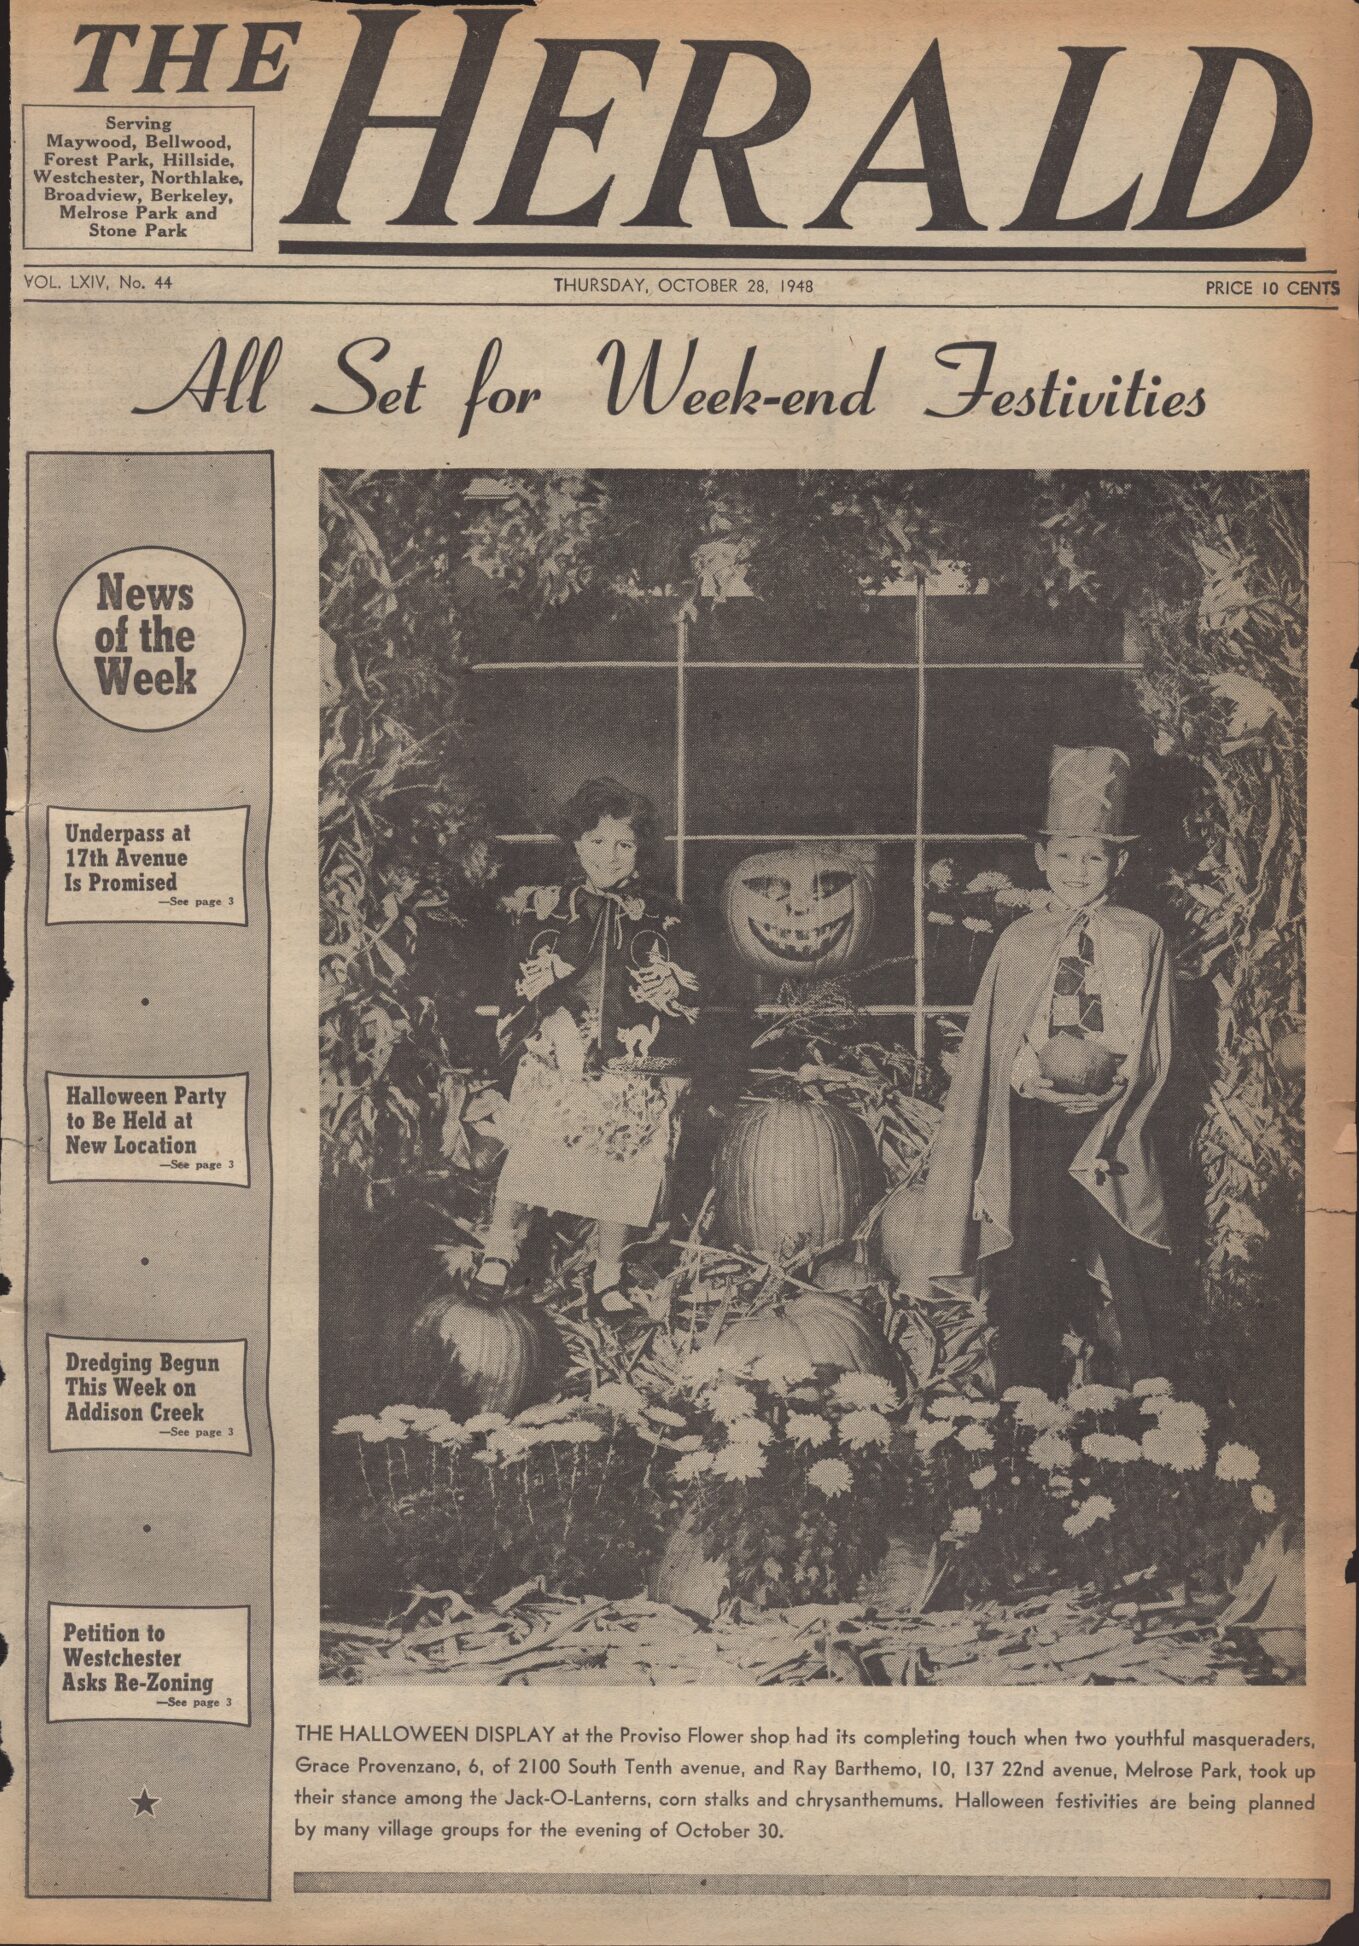 The Herald – 19481028